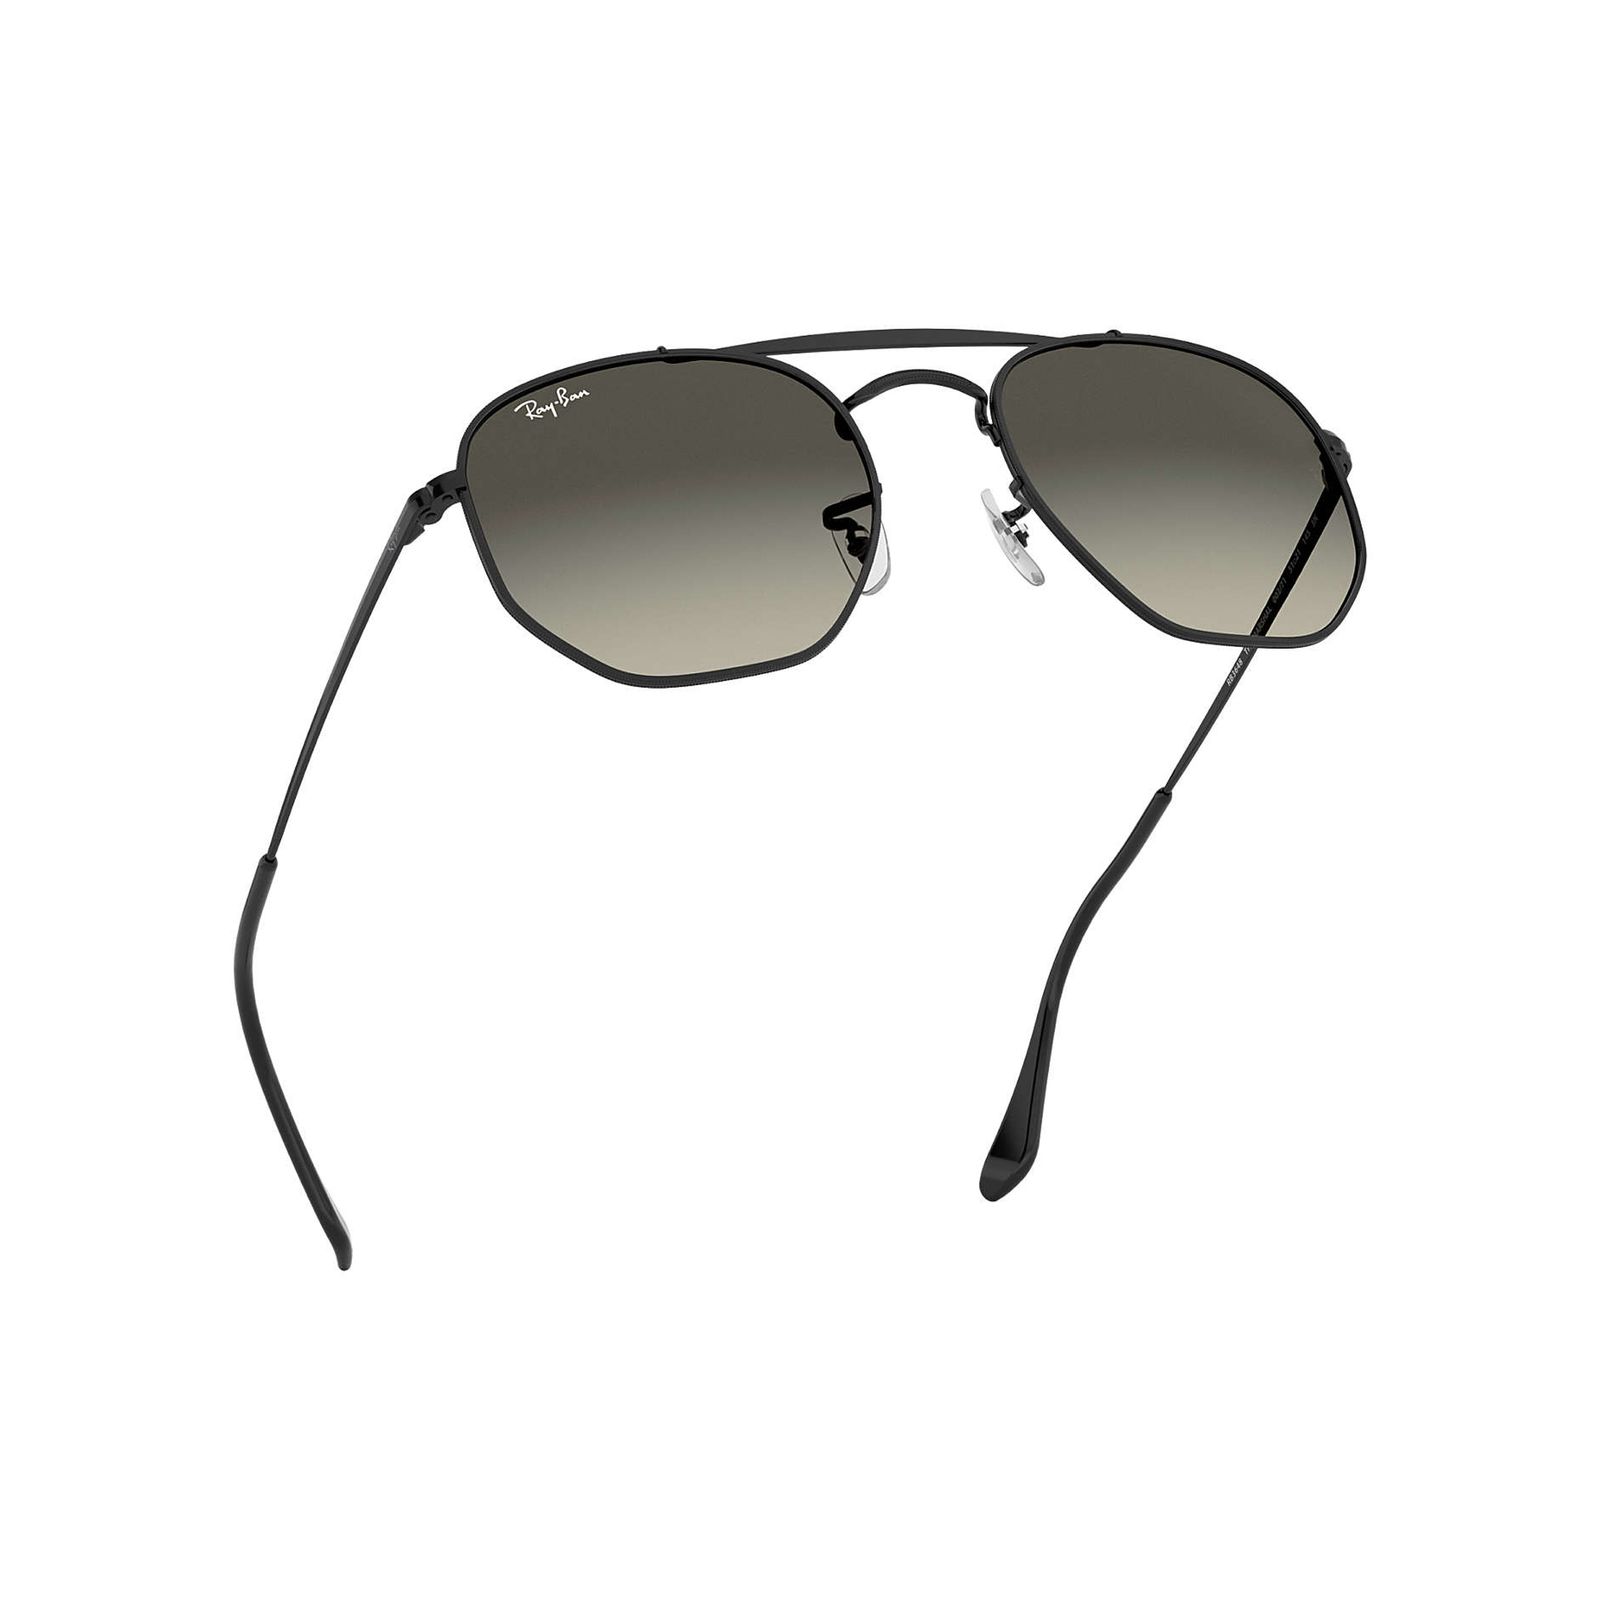 عینک آفتابی ری بن مدل 3648-002/71-54 - مشکی - 4